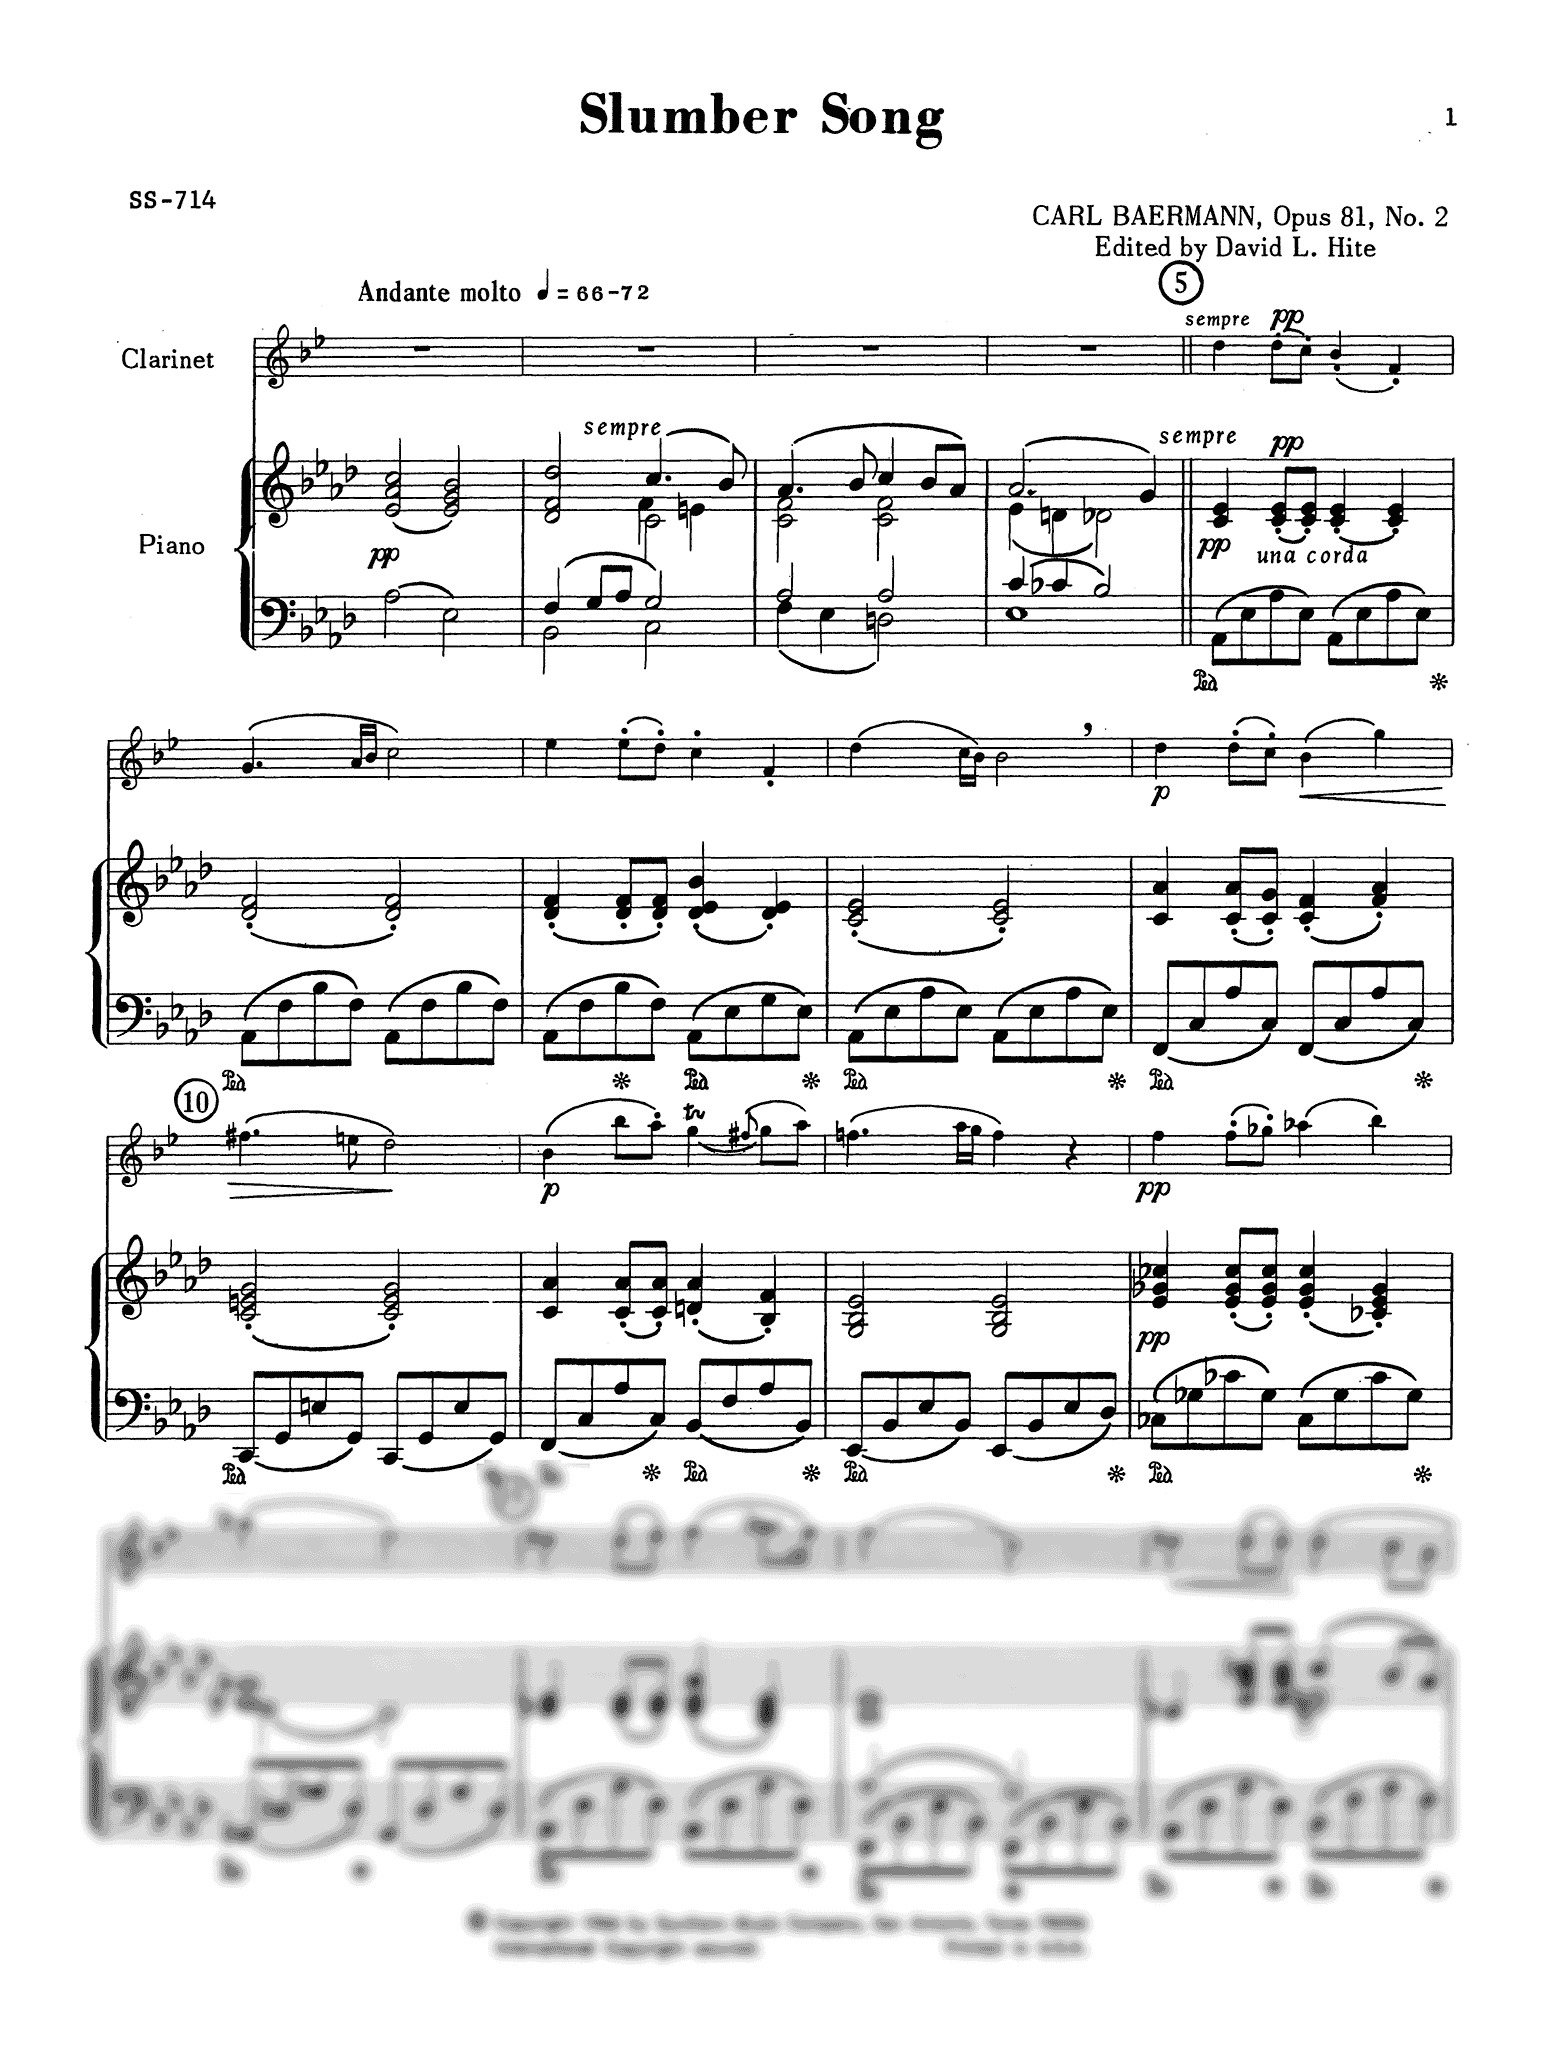 Baermann Slumber Song, Op. 81 No. 2 Clarinet & piano score